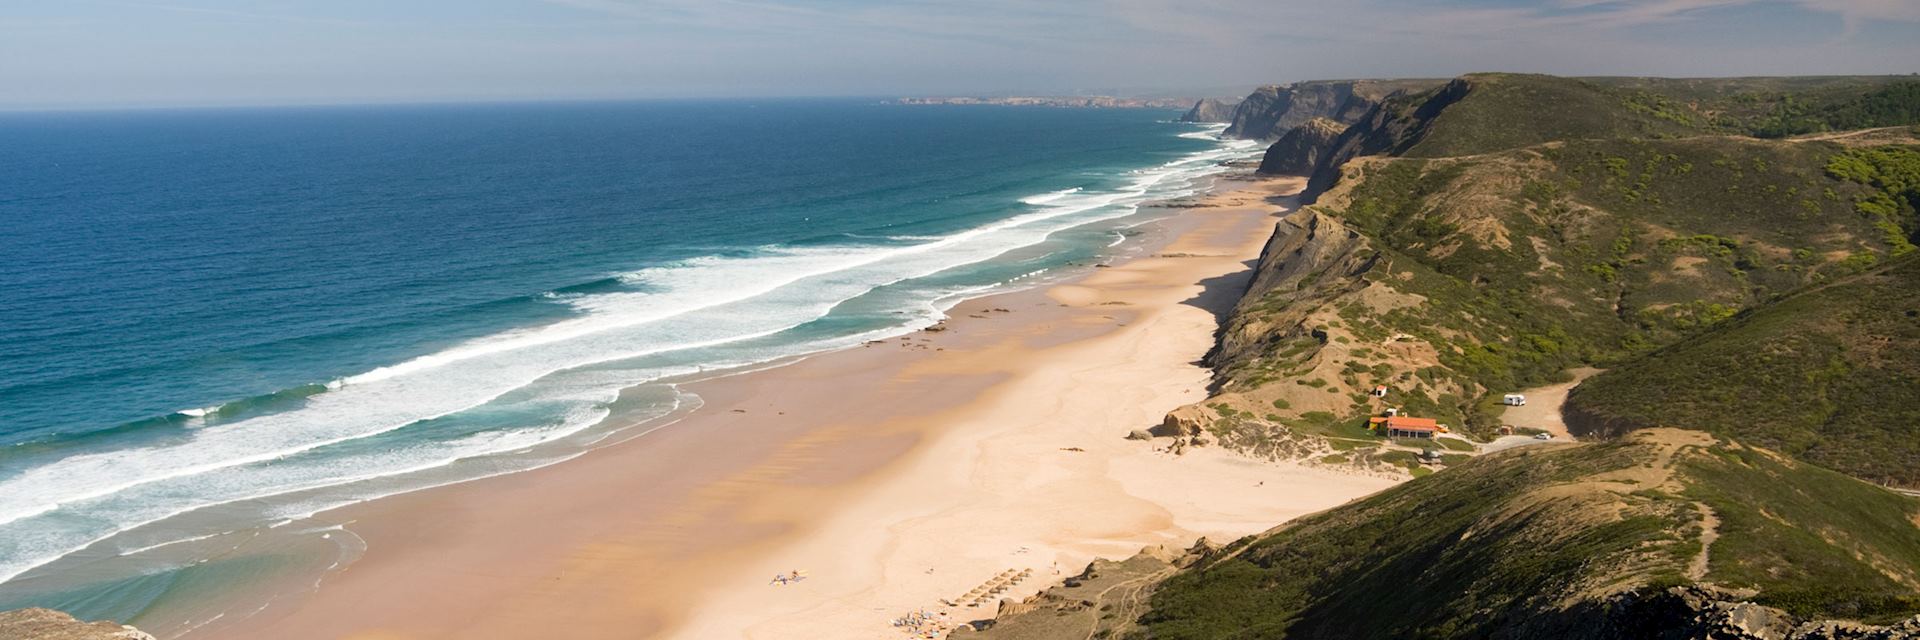 Praia do cordama on Portugal's Algarve coast